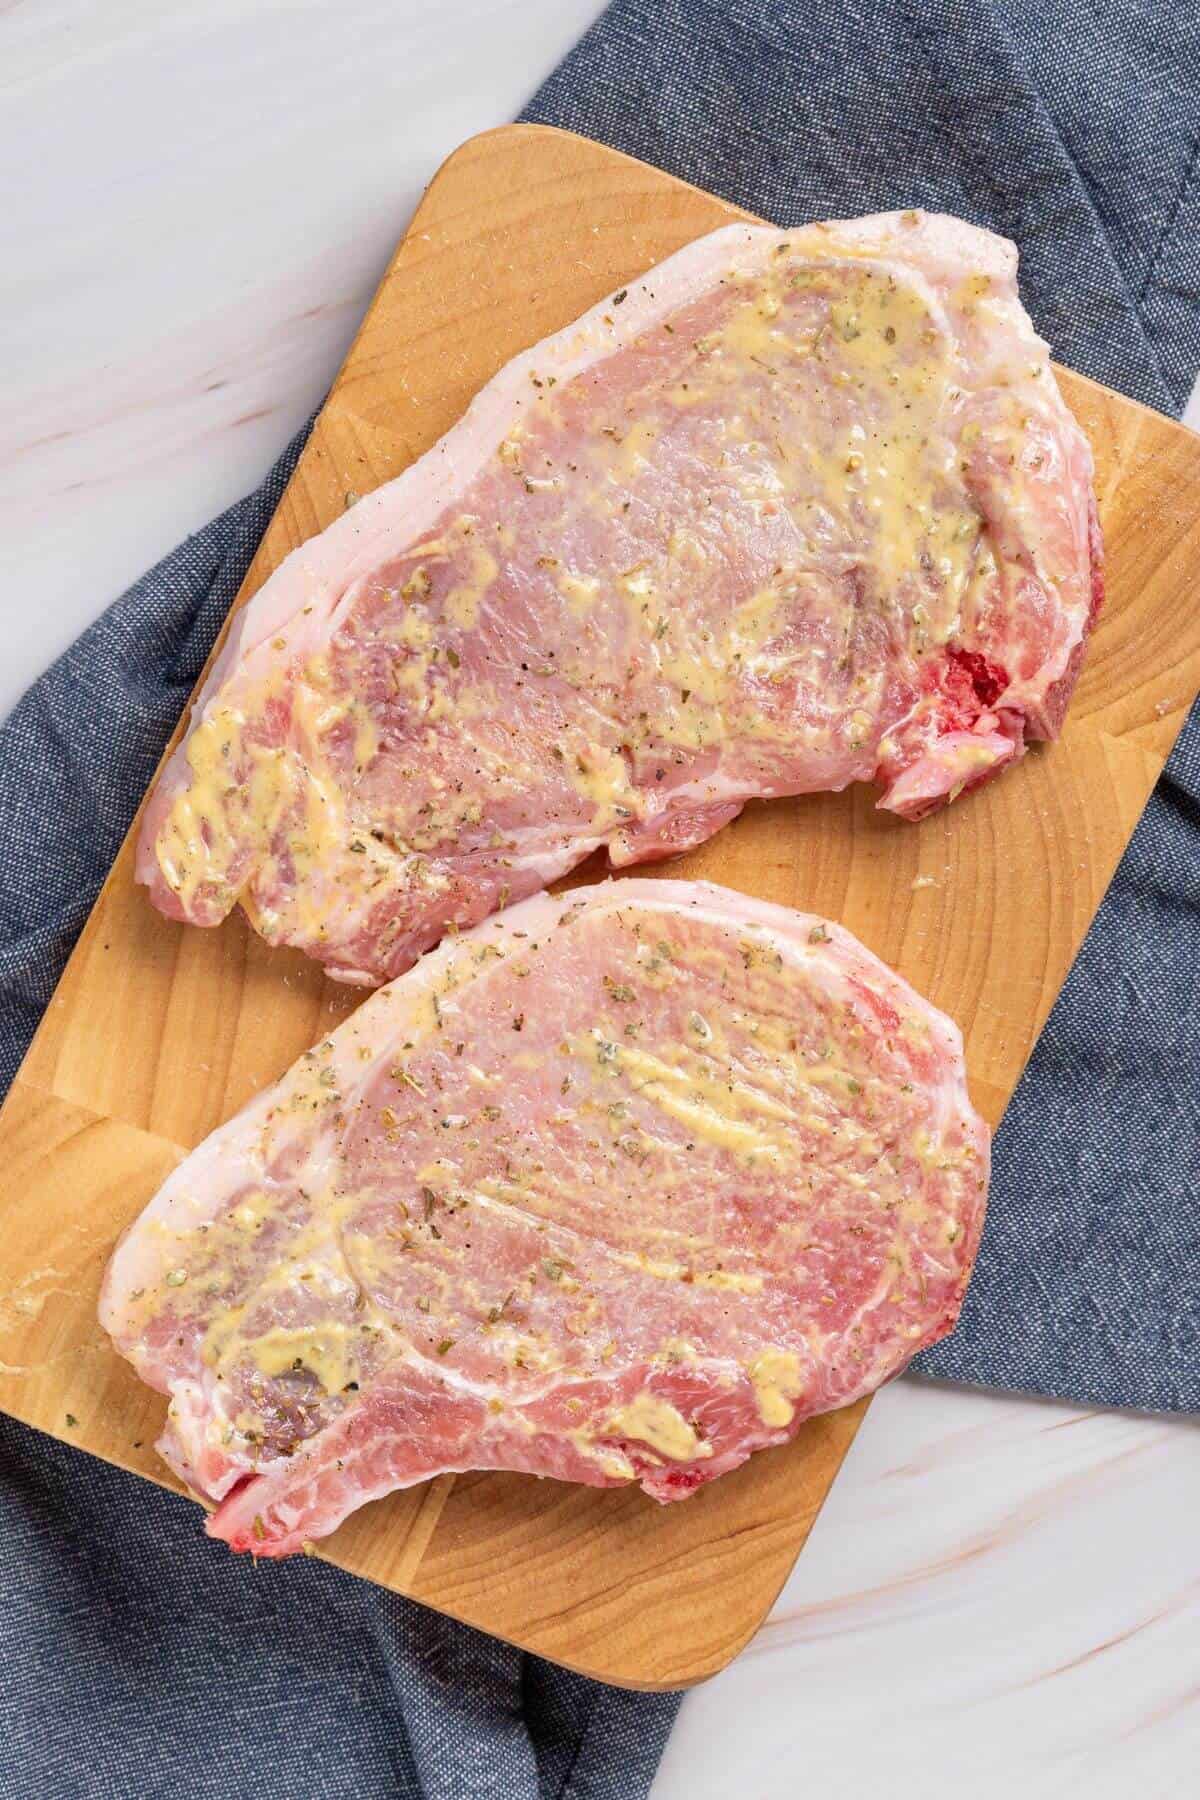 Meat coated with seasonings.